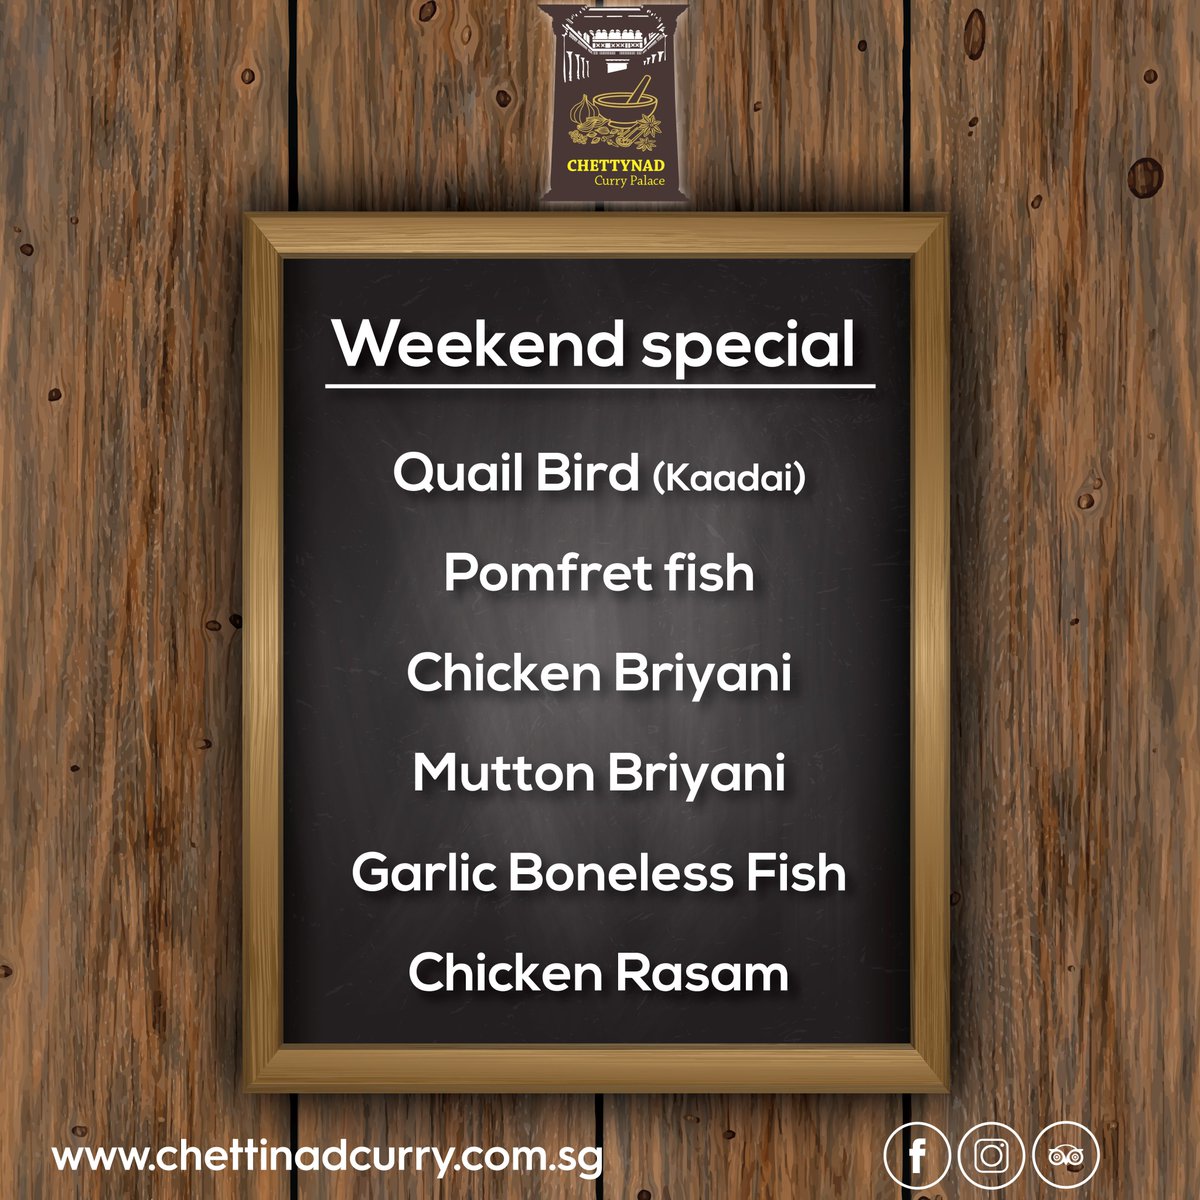 #chettynadcurrysg #amazing #special #recipes #quailbird #chickenbriyani #muttonbriyani #chickenrasam #pomfretfish #garlicbonelessfish #foodiee #foodlover #foodeating #enjoy #weekend